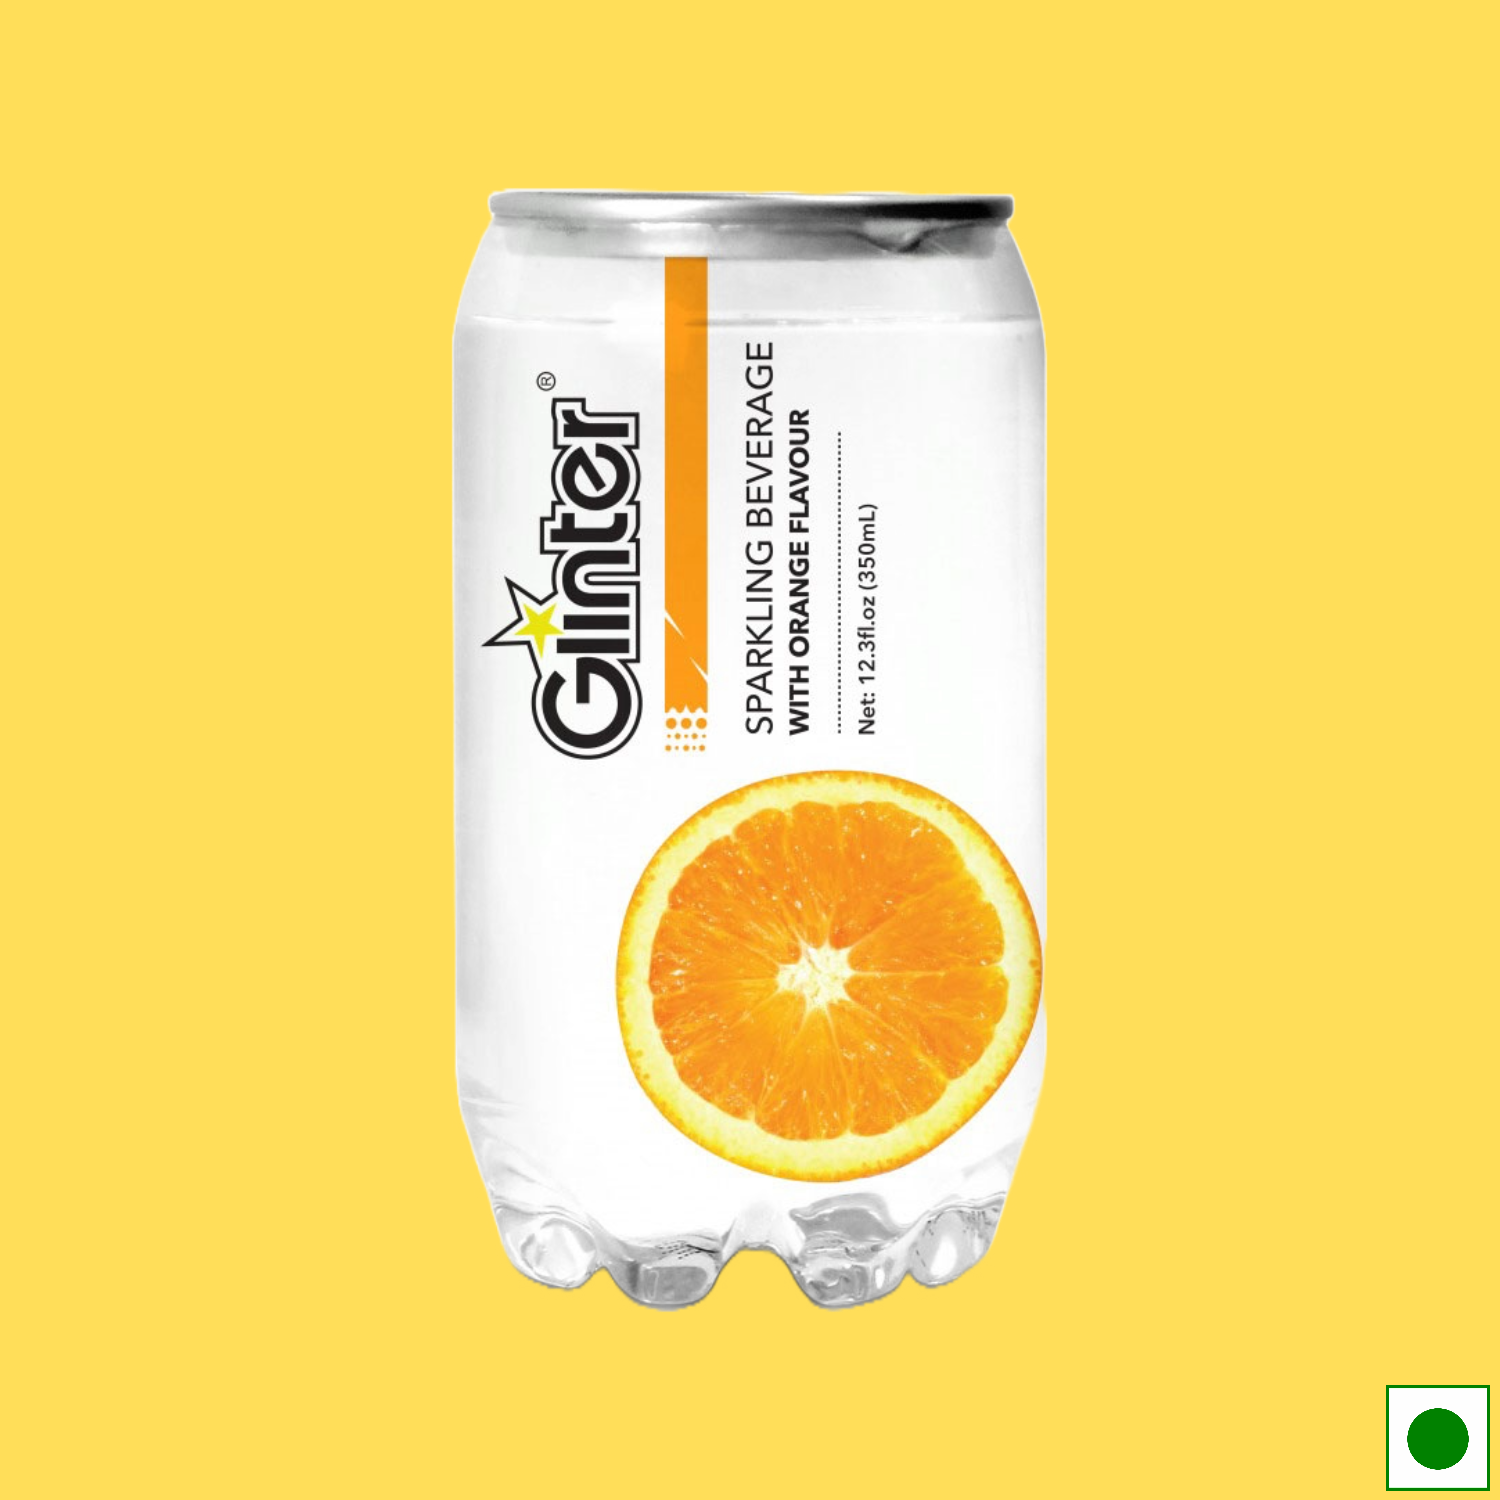 Glinter Sparkling Beverage Orange, 350ml (Imported)